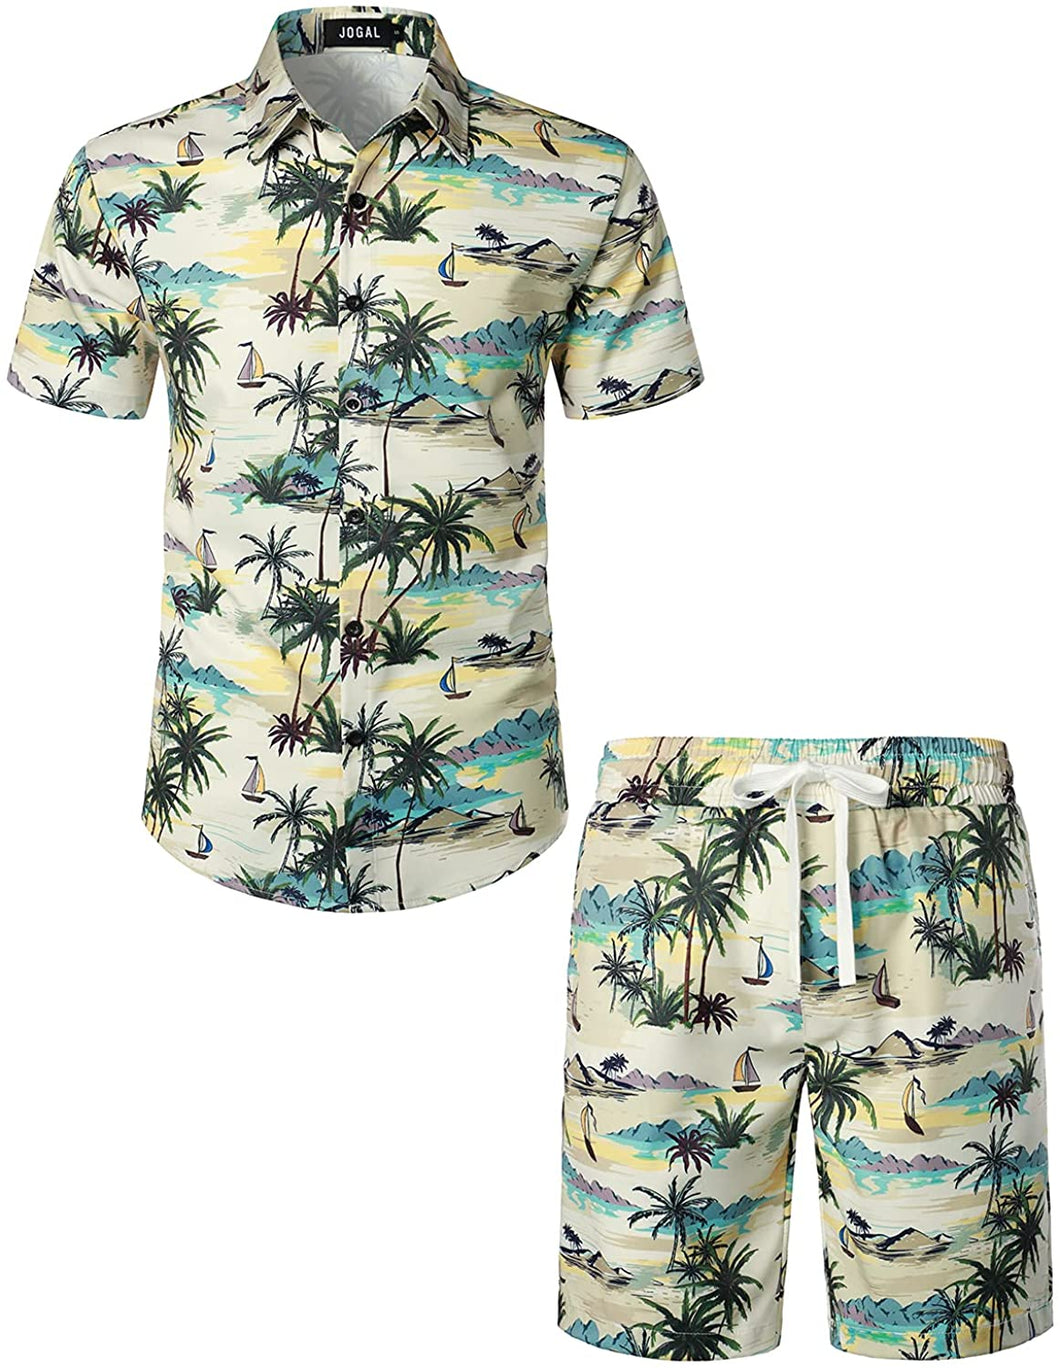 Men's Hawaiian Prints Beige Button Down Shirt-Pants Set